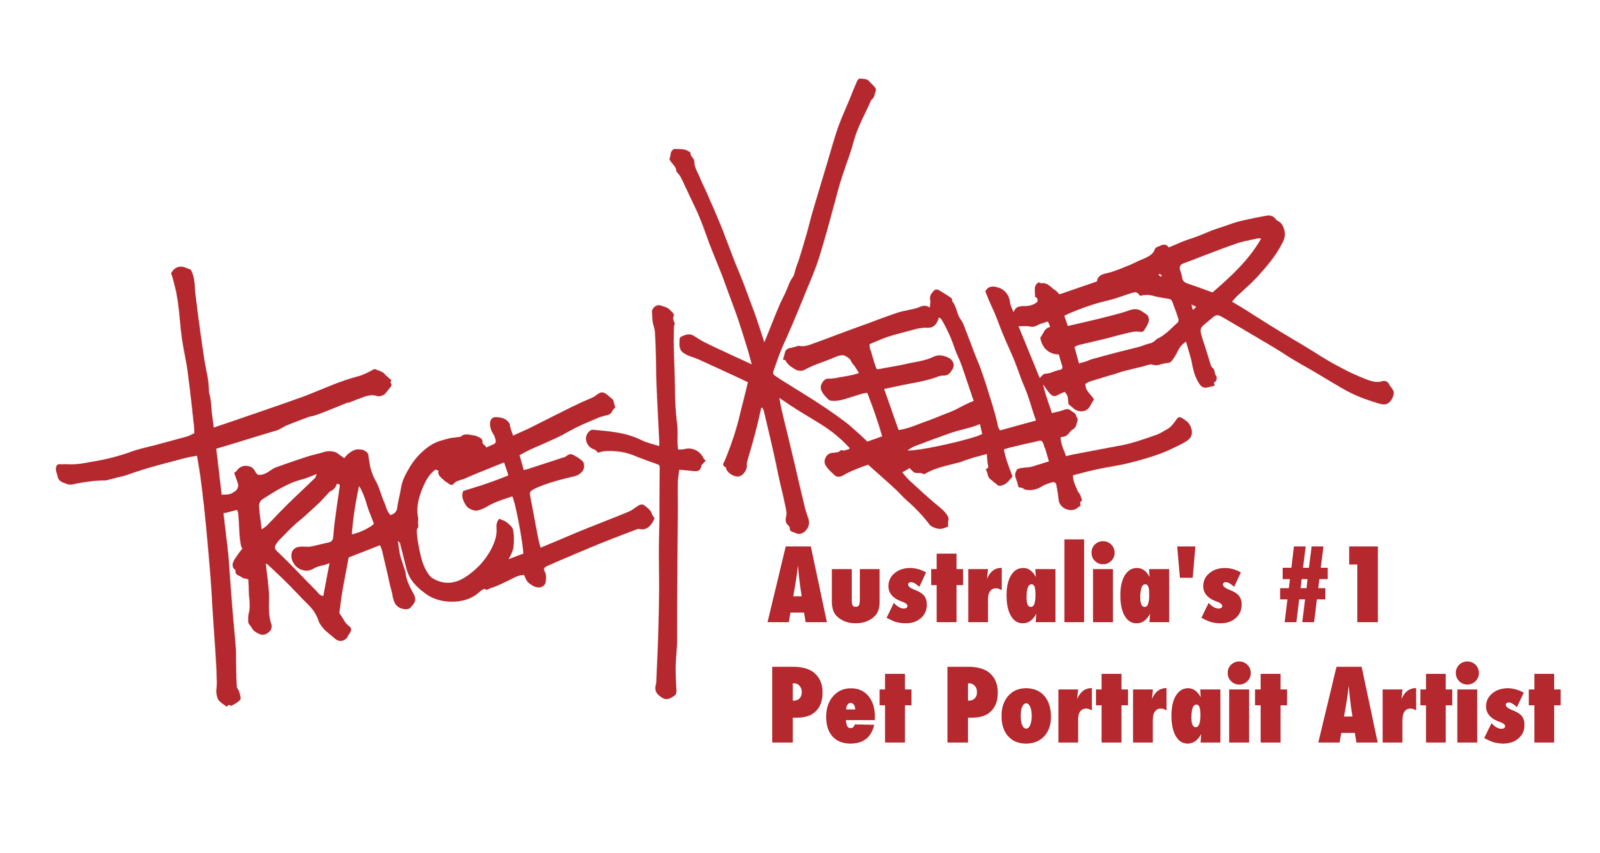 Tracey Keller  | Australia's #1 Pet Portrait Artist